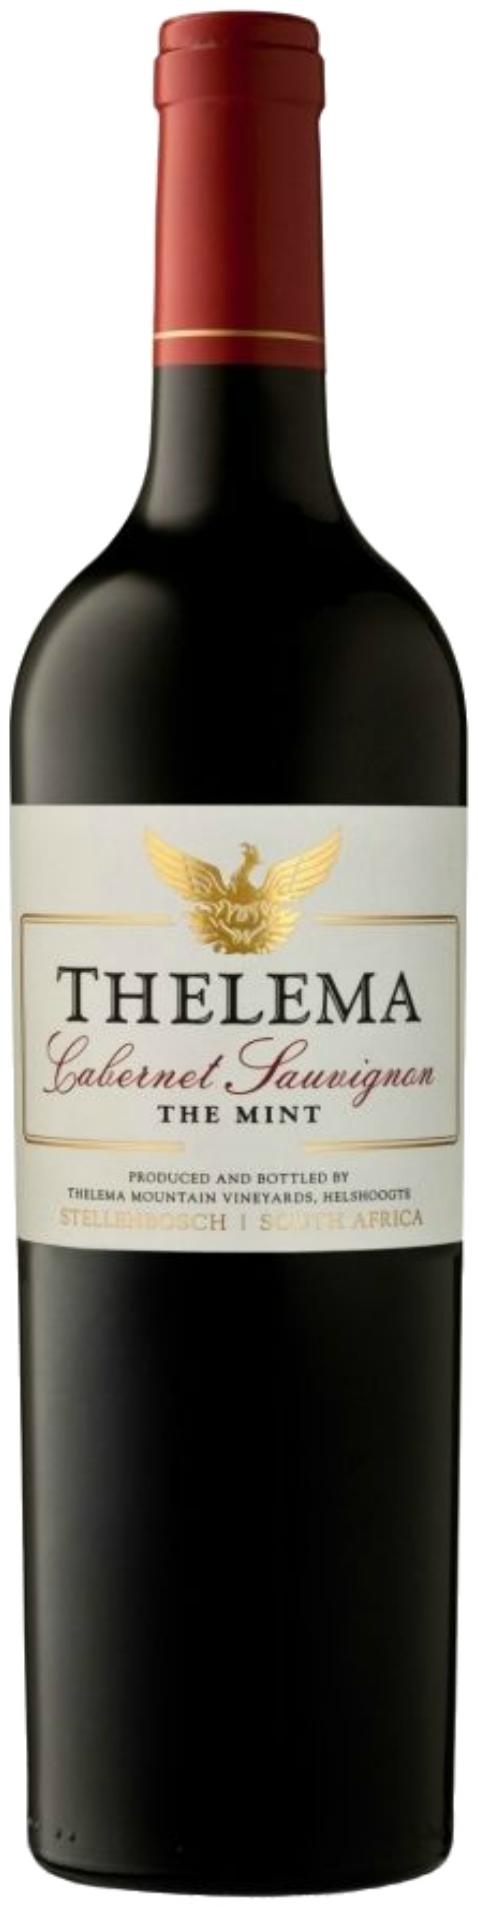 Thelema The Mint Cabernet Sauvignon Magnum 2014